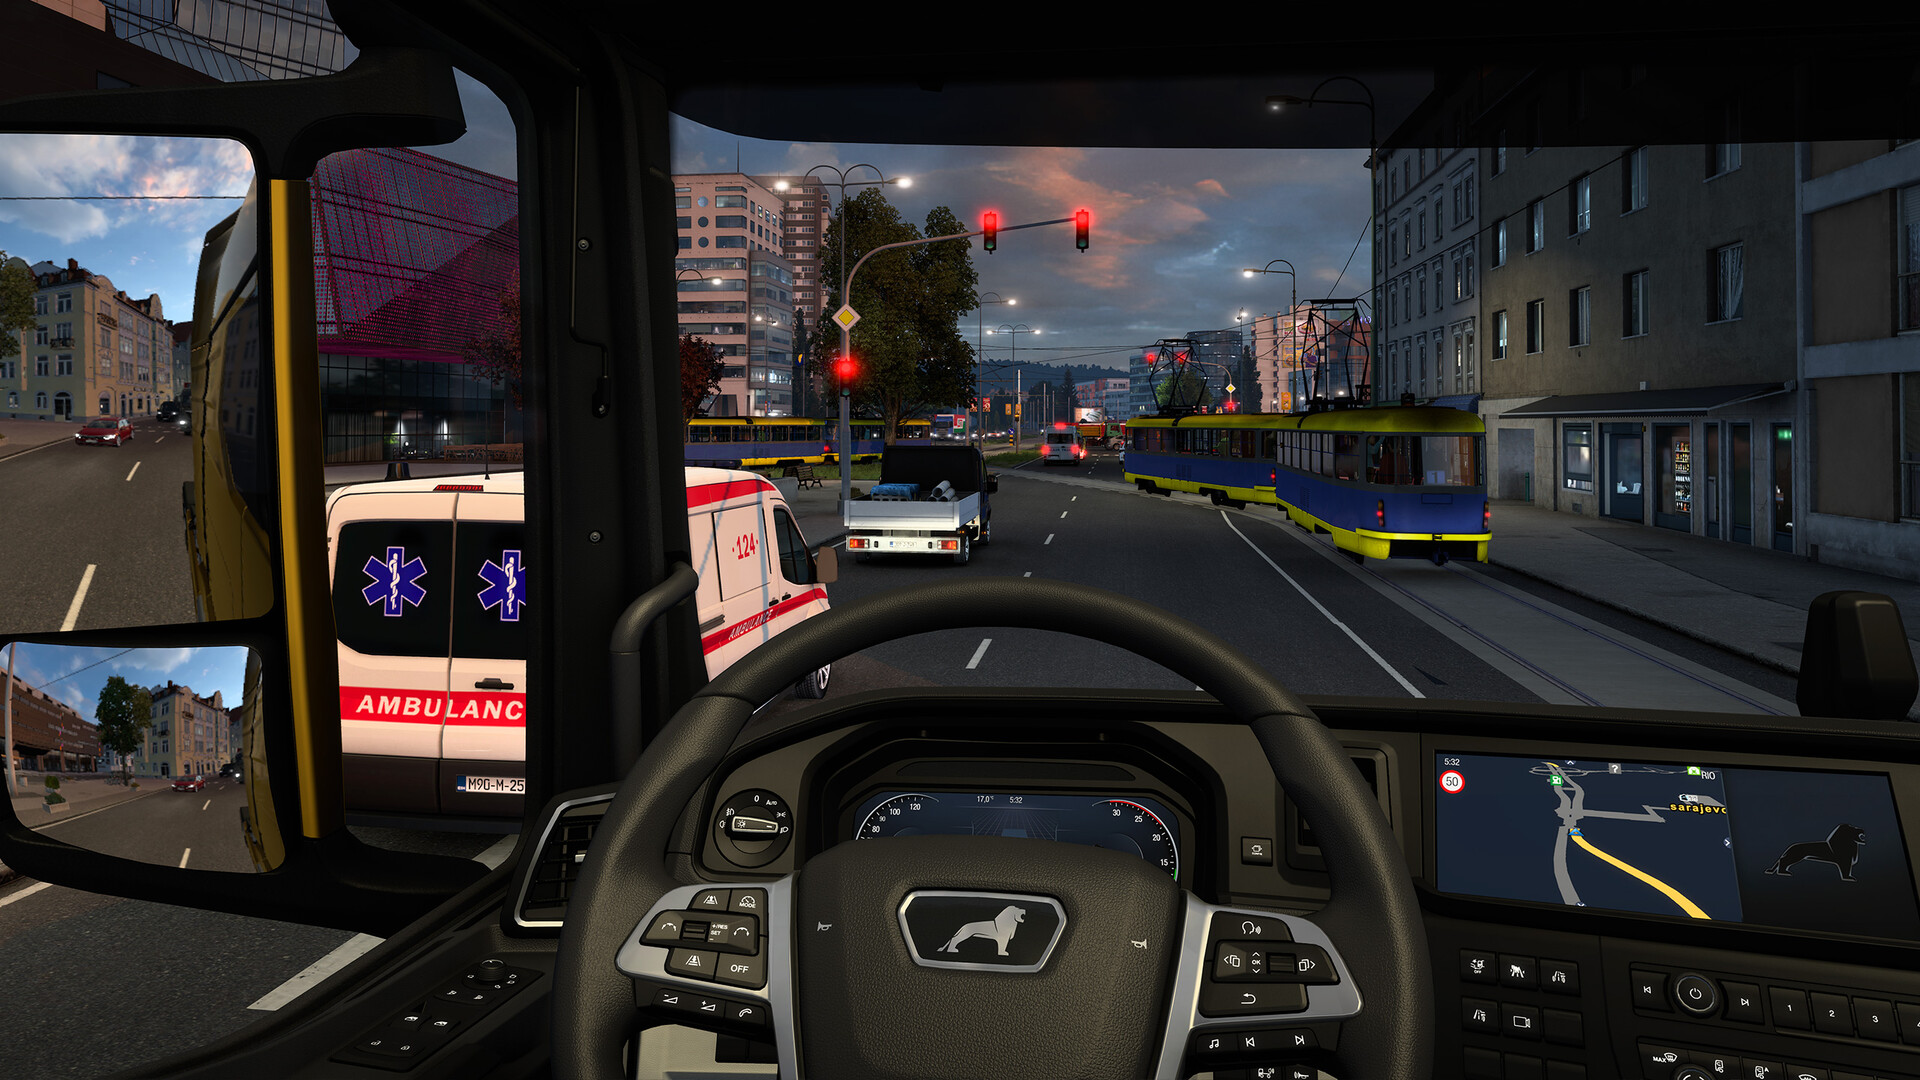 Euro Truck Simulator 2 Vive la France DLC PC Game Steam Key Region Free